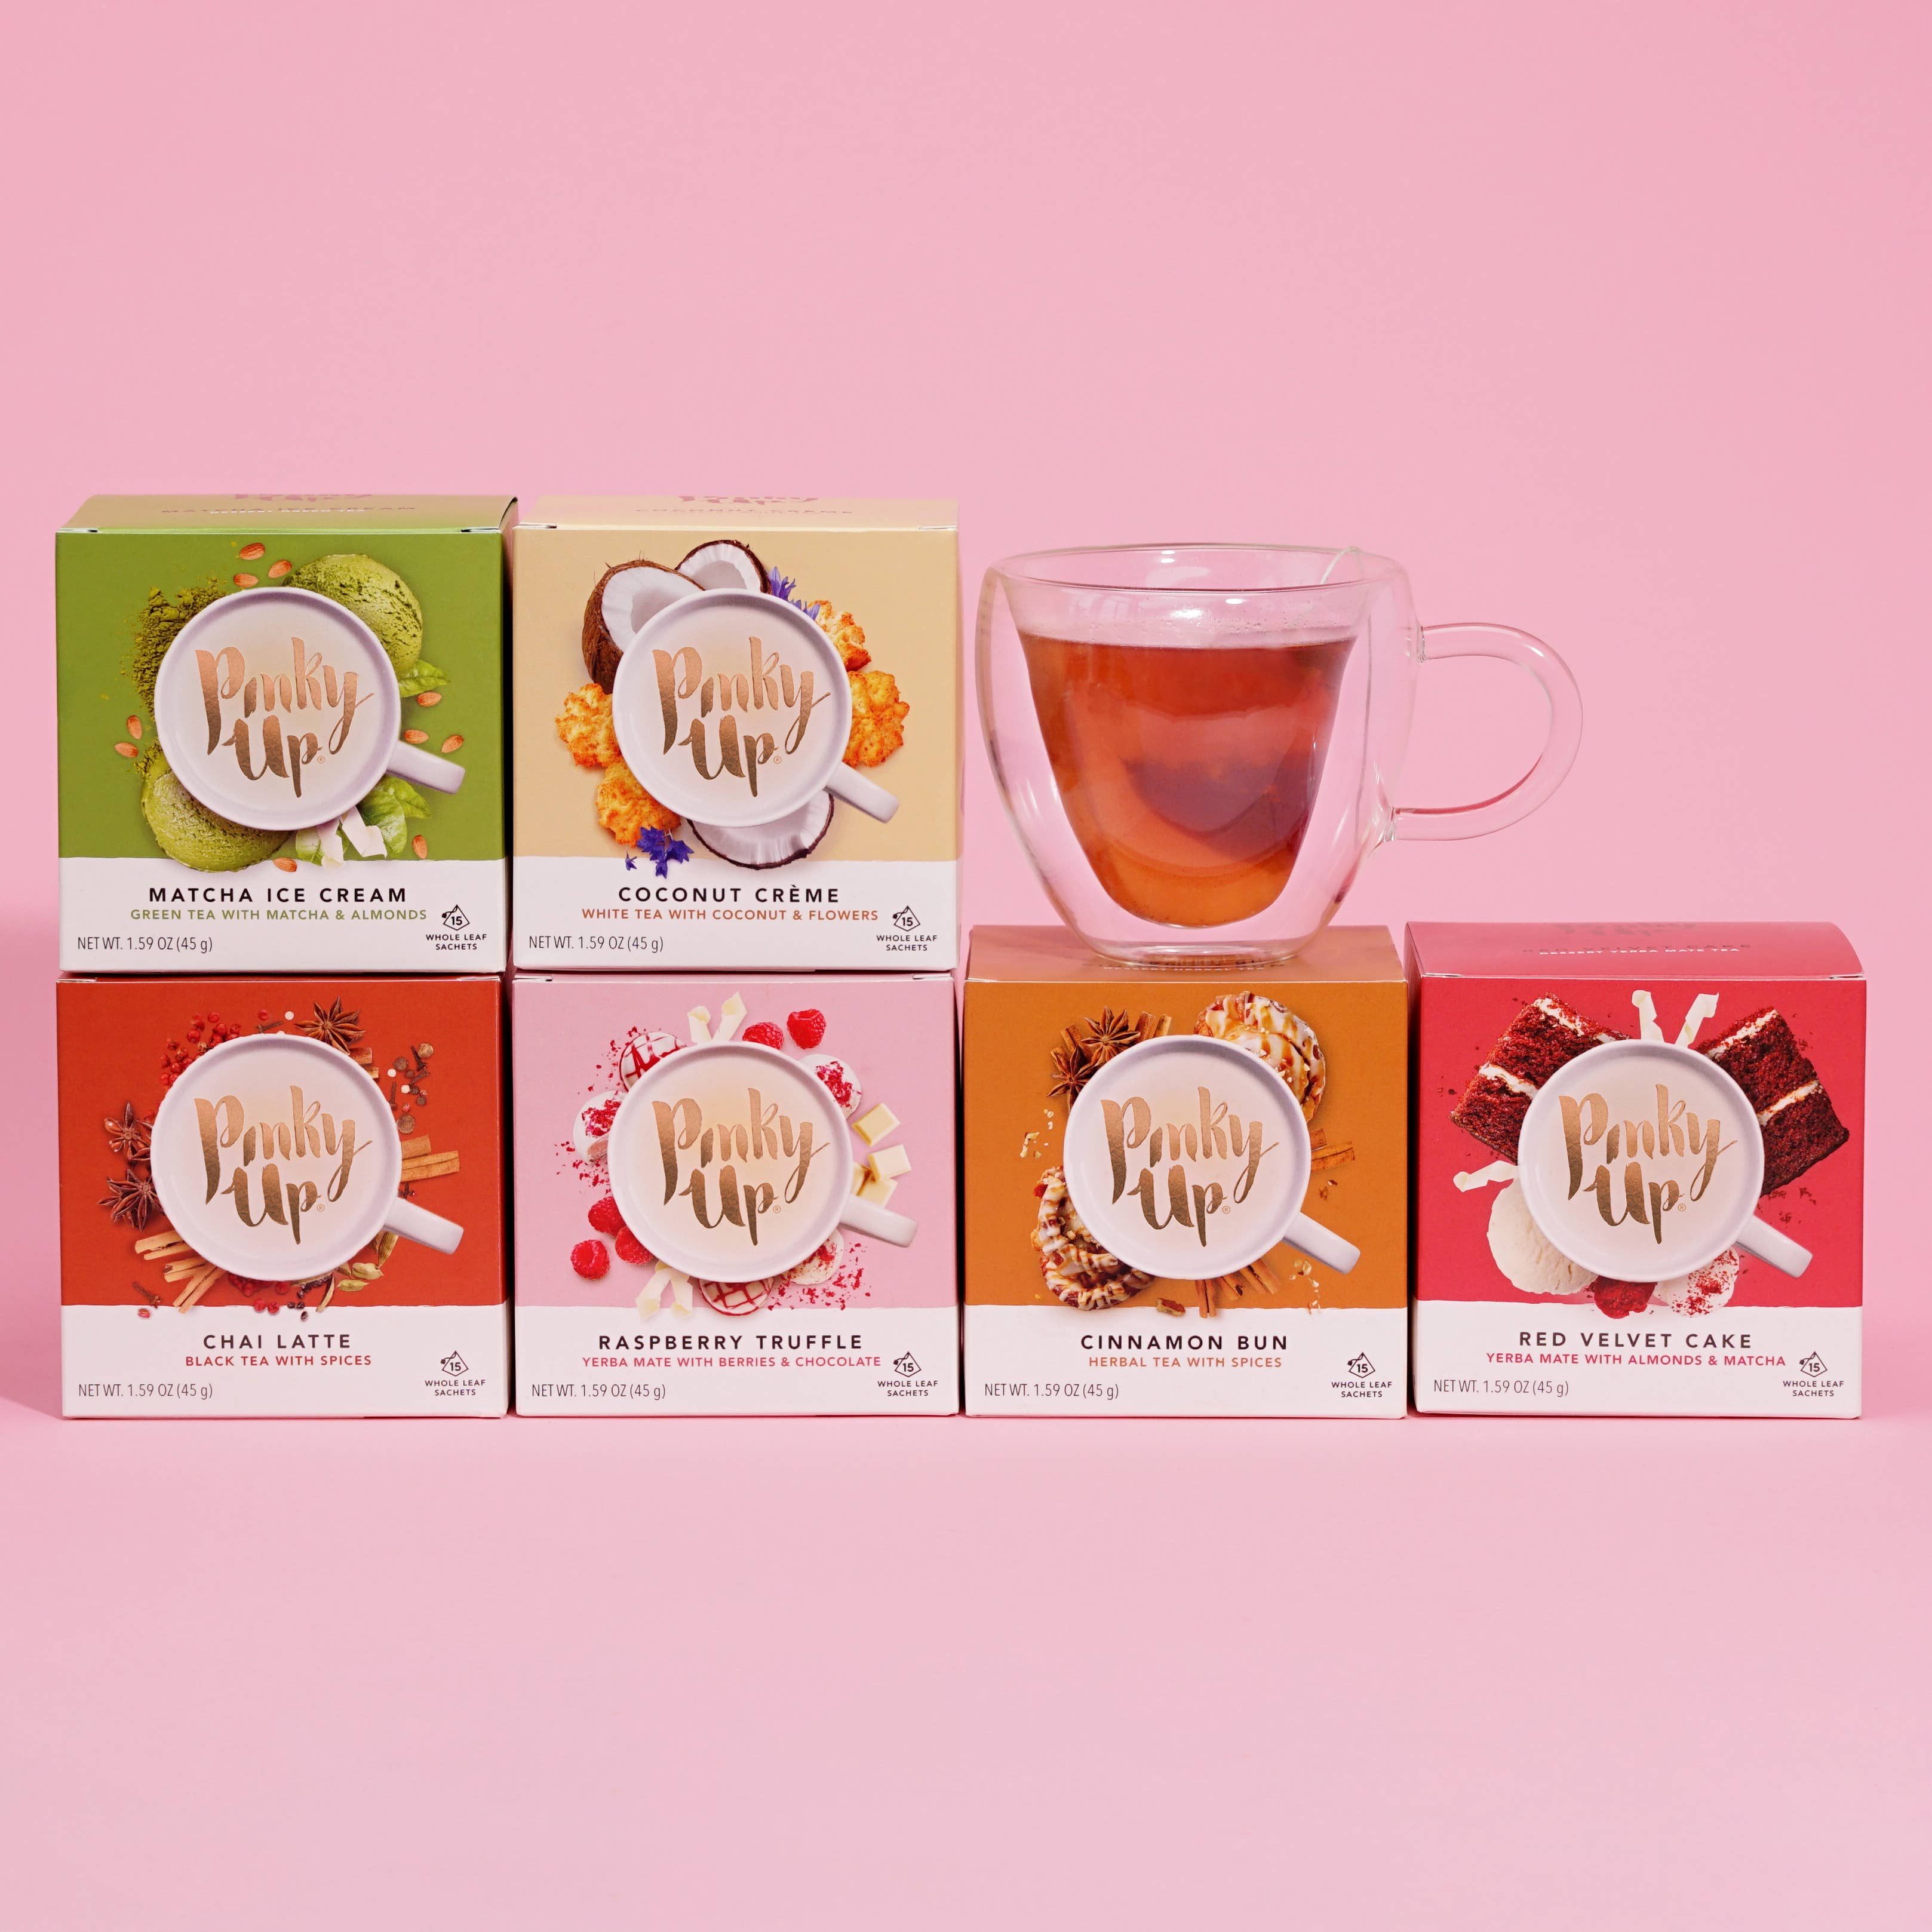 Pinky Up - Chai Latte Pyramid Tea Sachets